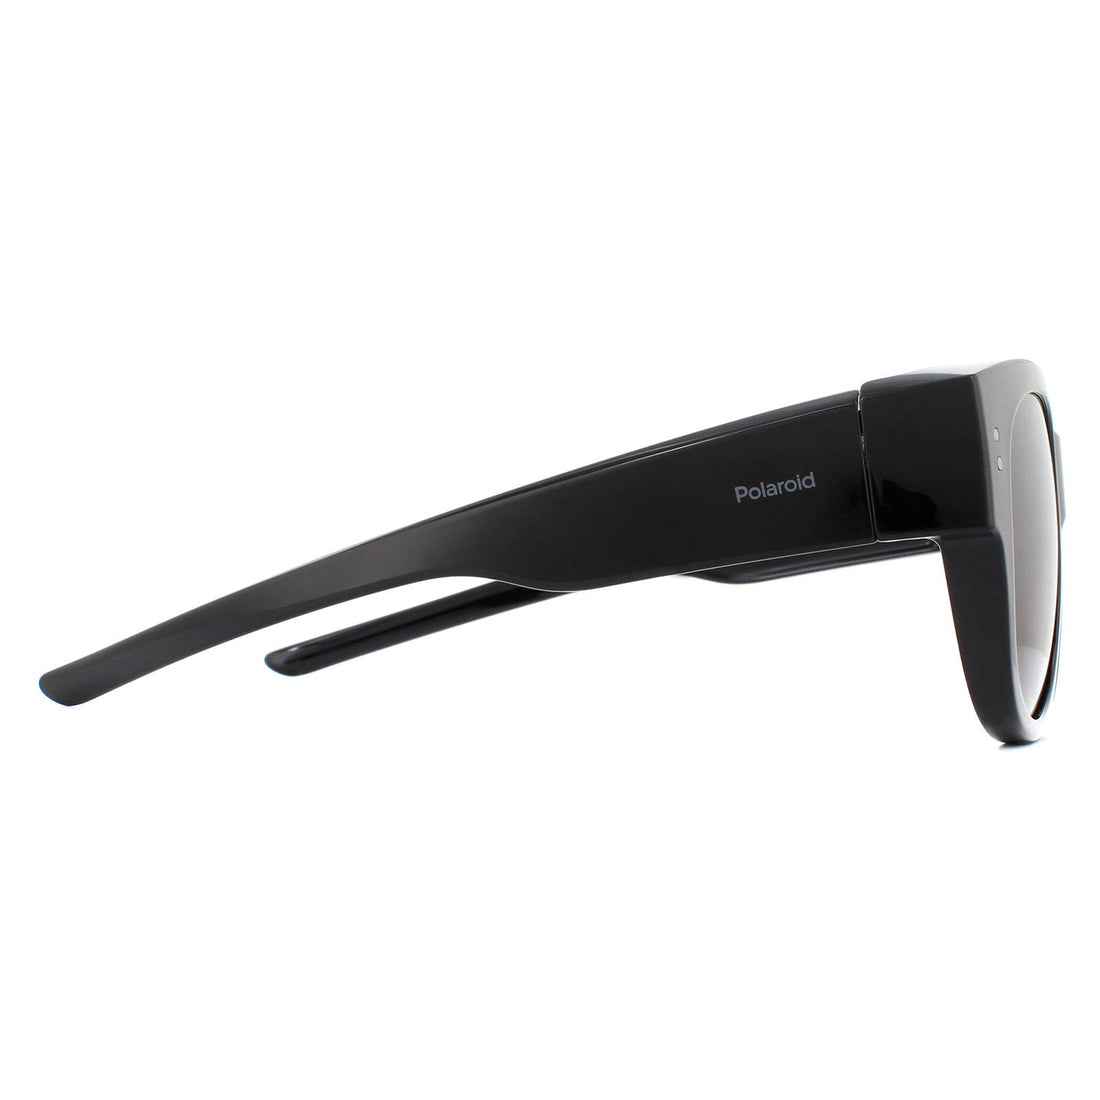 Polaroid Suncovers Sunglasses PLD 9009/S 807 M9 Black Grey Polarized